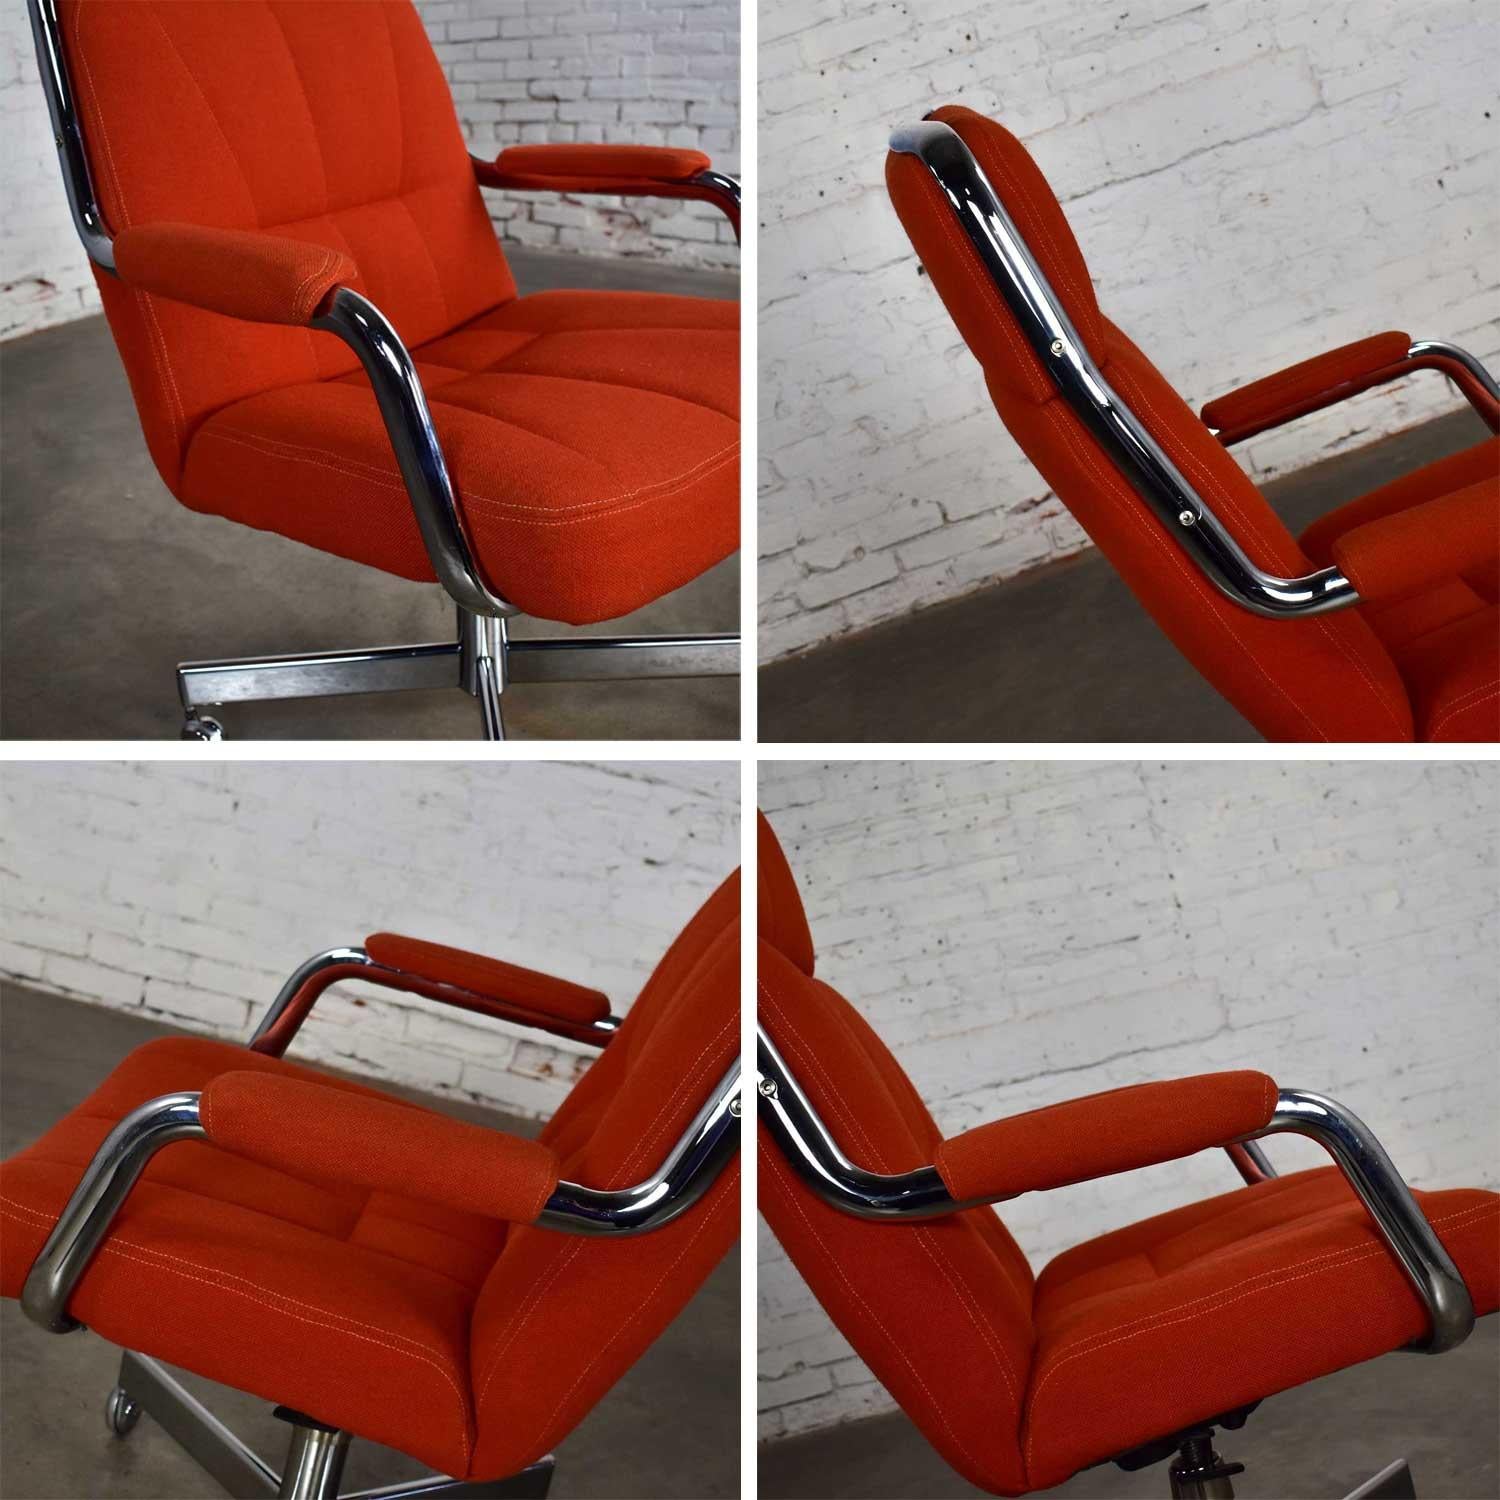 Chromcraft Adjustable Armed High Back Rolling Office Chair Orange Hopsack Fabric 11